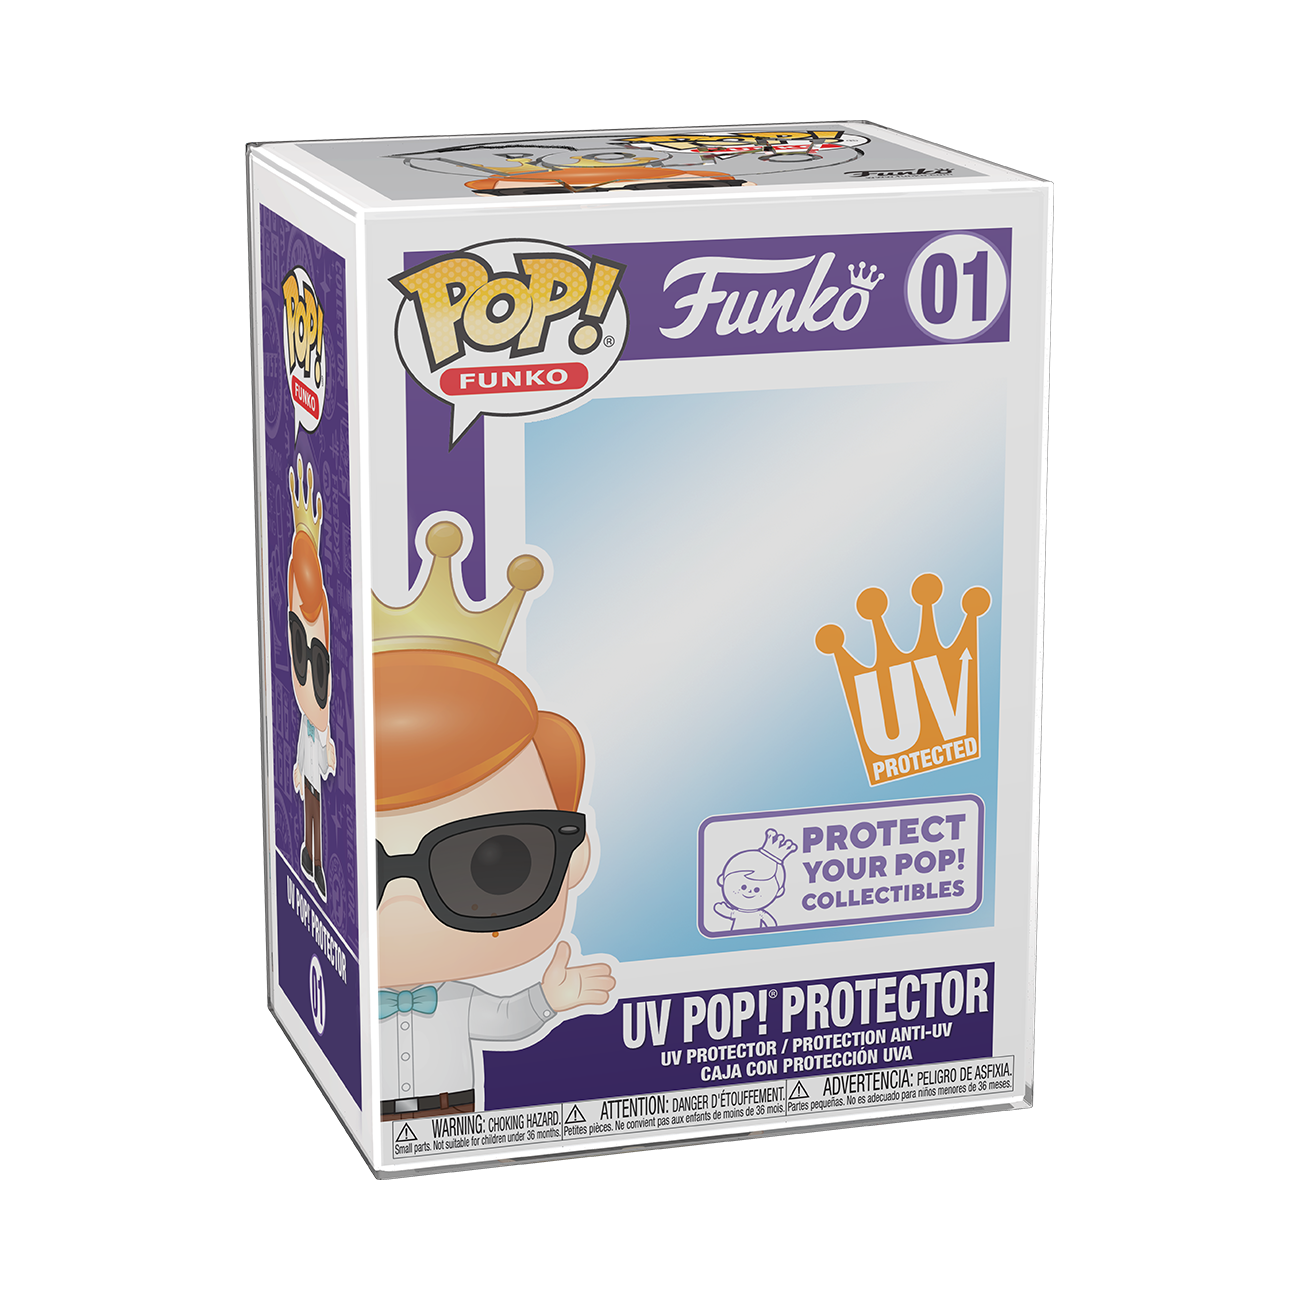 Buy UV Premium Pop! Protector at Funko.